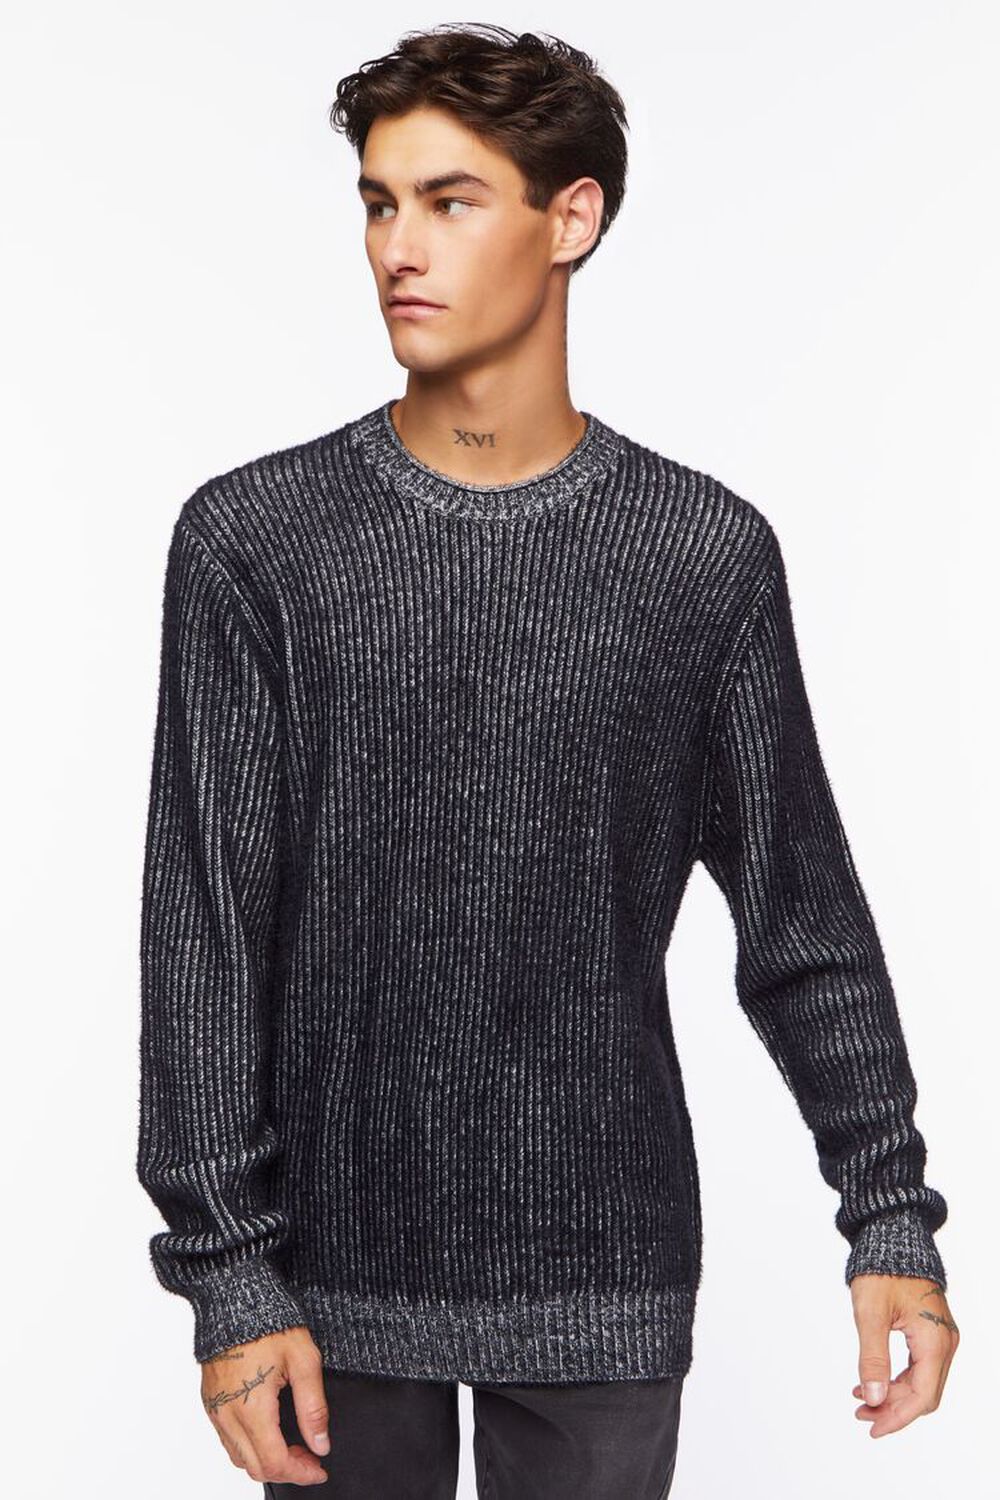 BLACK/WHITE Striped Marled Knit Sweater, image 1